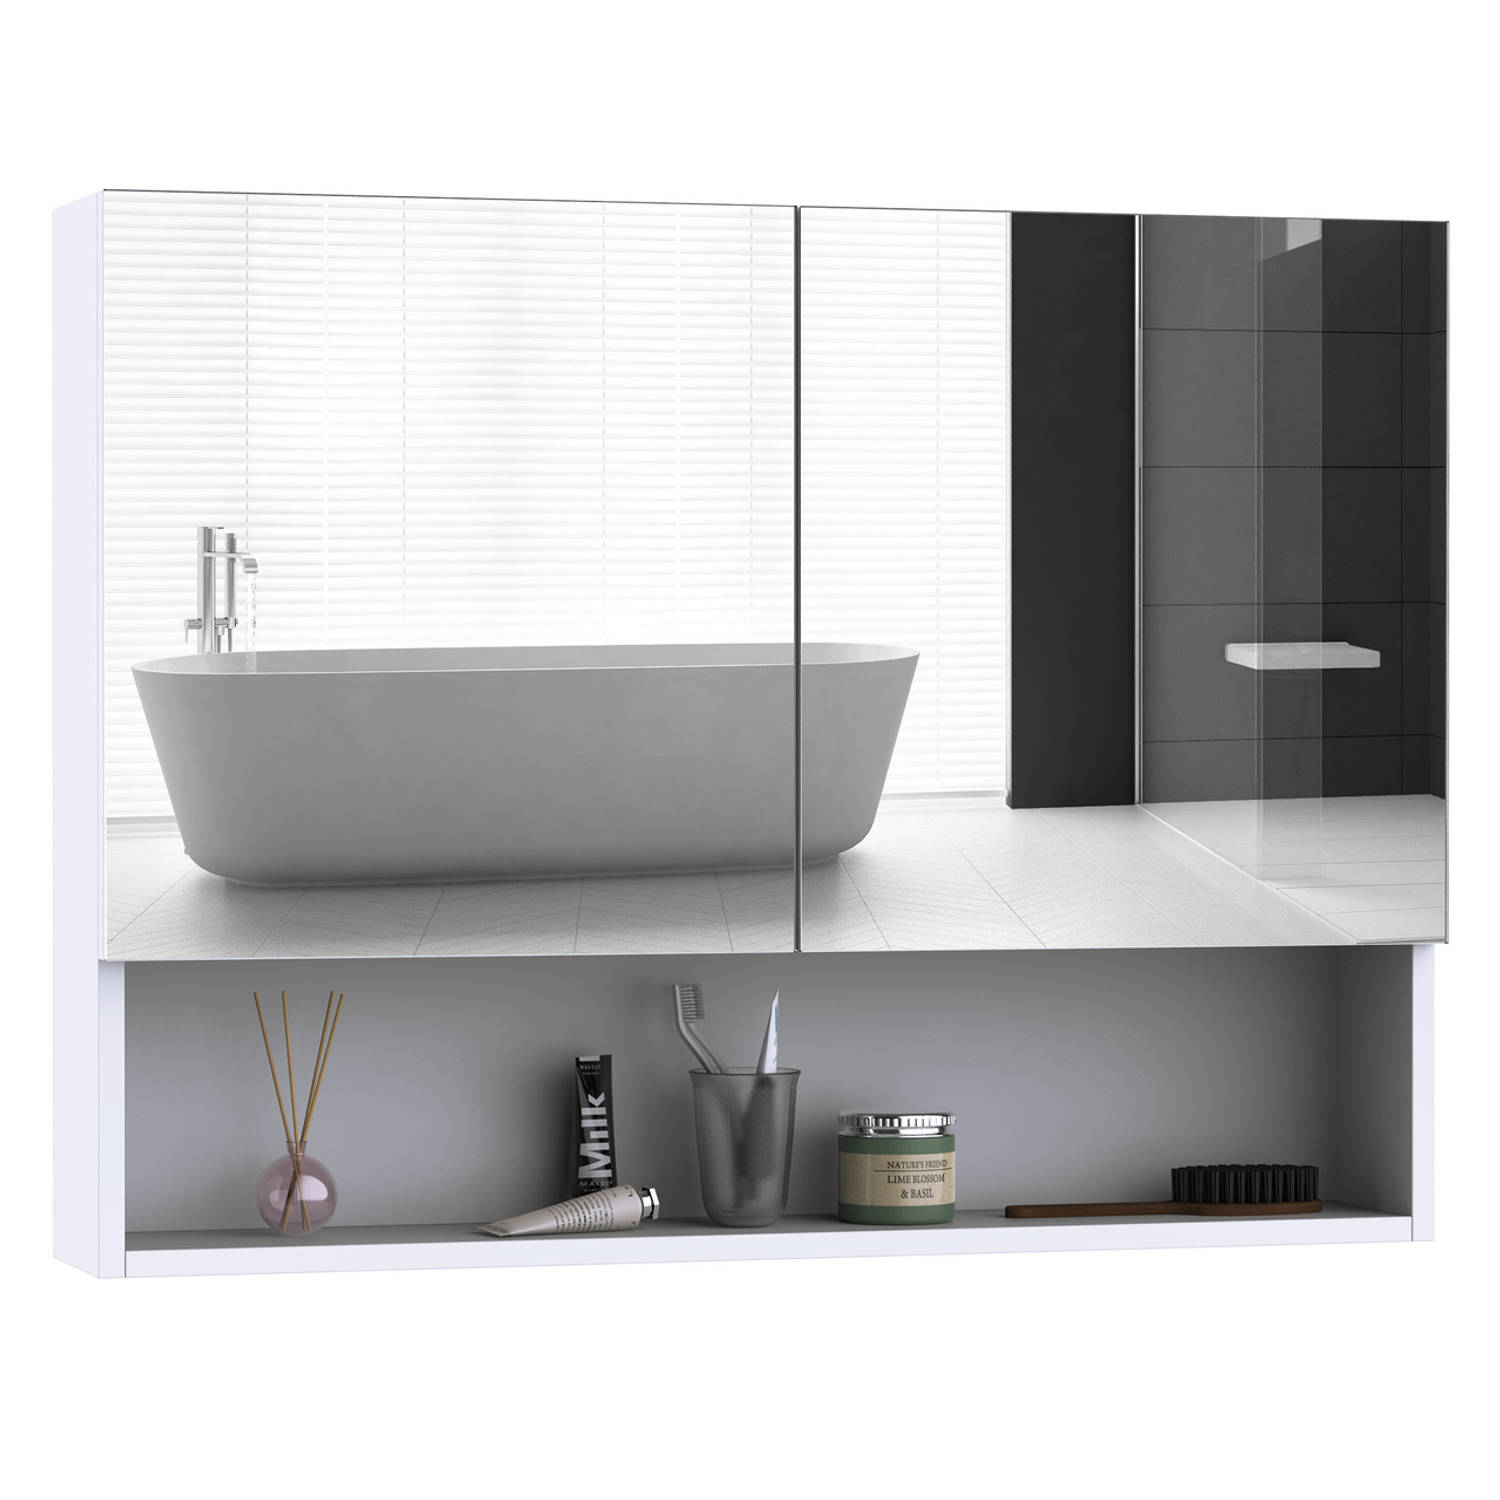 Badkamerspiegel met LED-lichtstrips - Badkamer accessoires- Spiegel - Wandspiegel - Spiegelkast - L80 x H60 x D15 cm